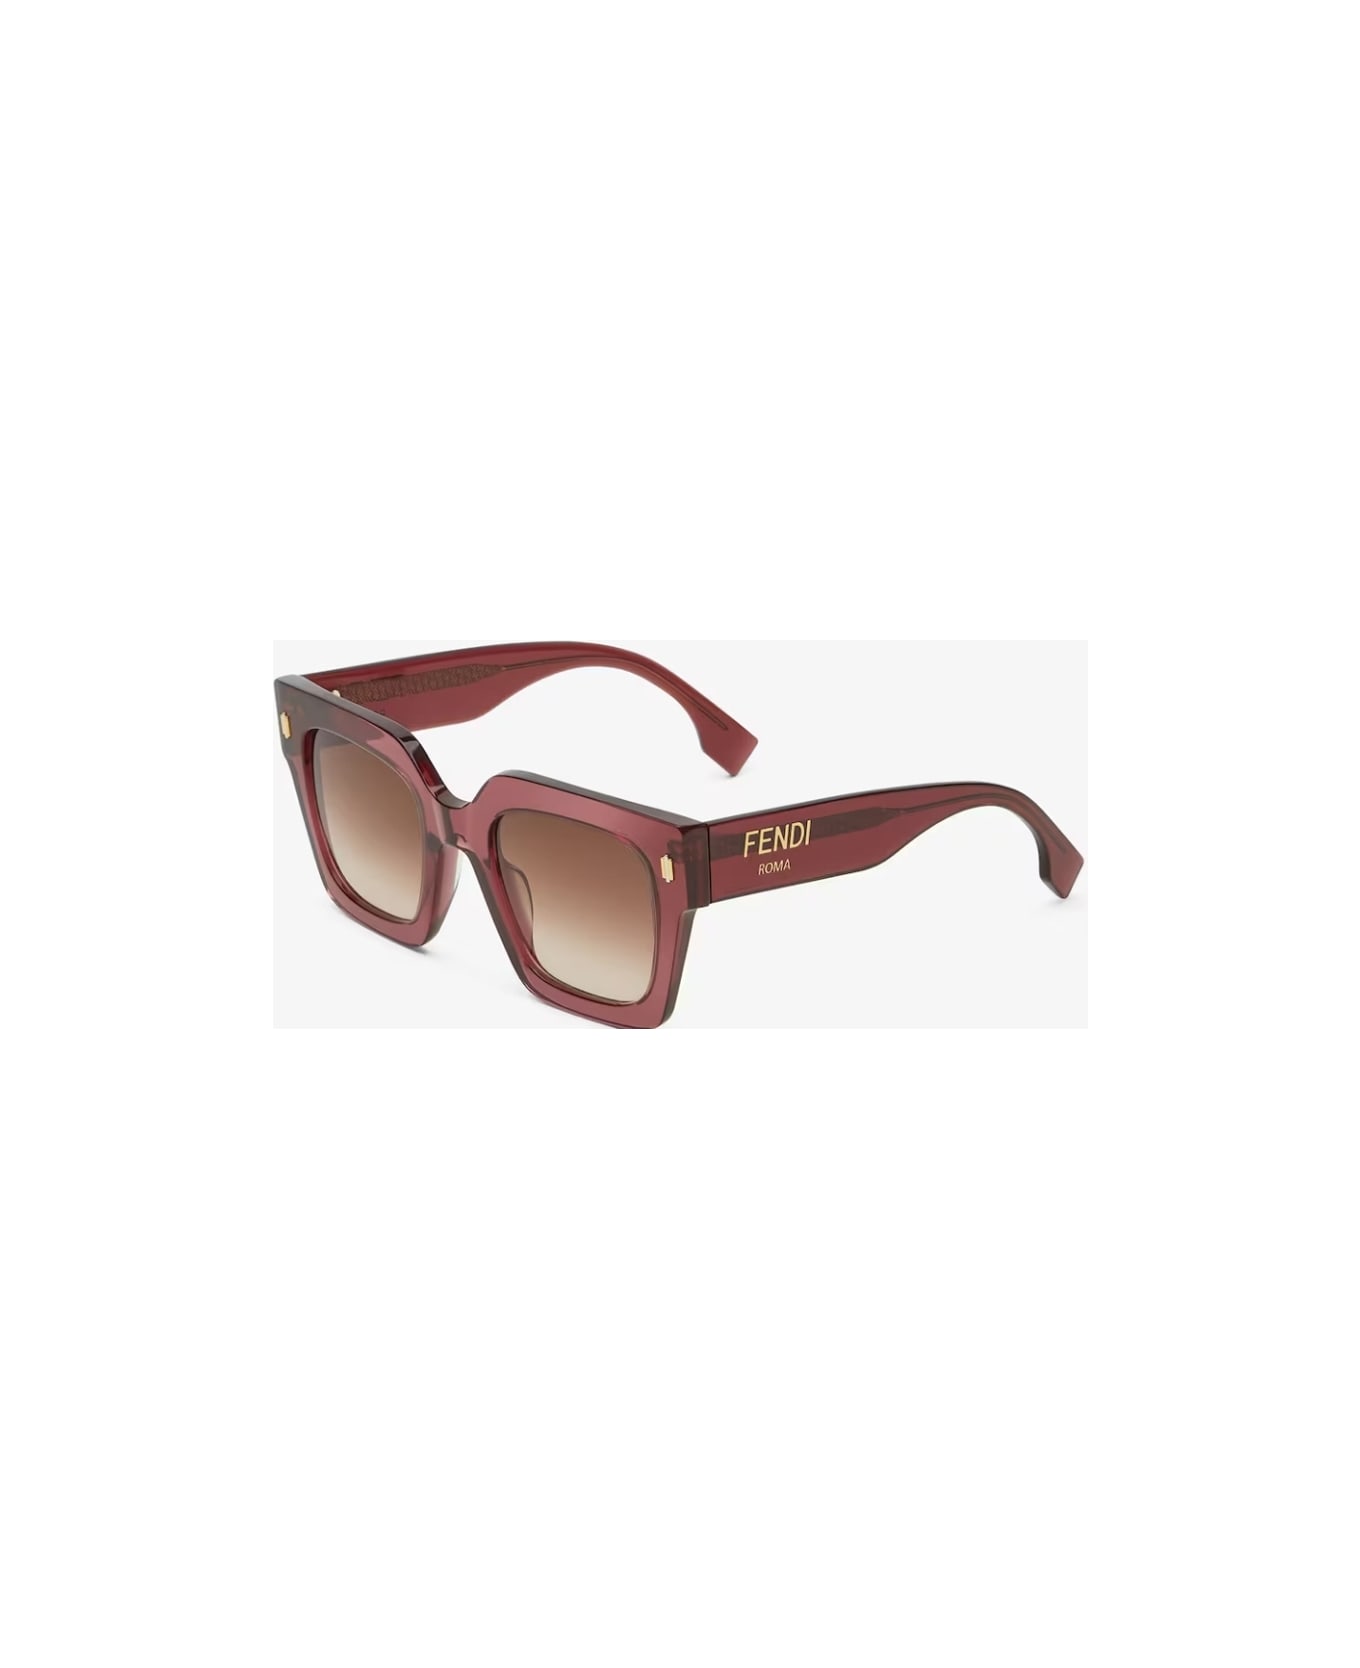 Fendi Eyewear FE40101i 81F Sunglasses - Burgundi